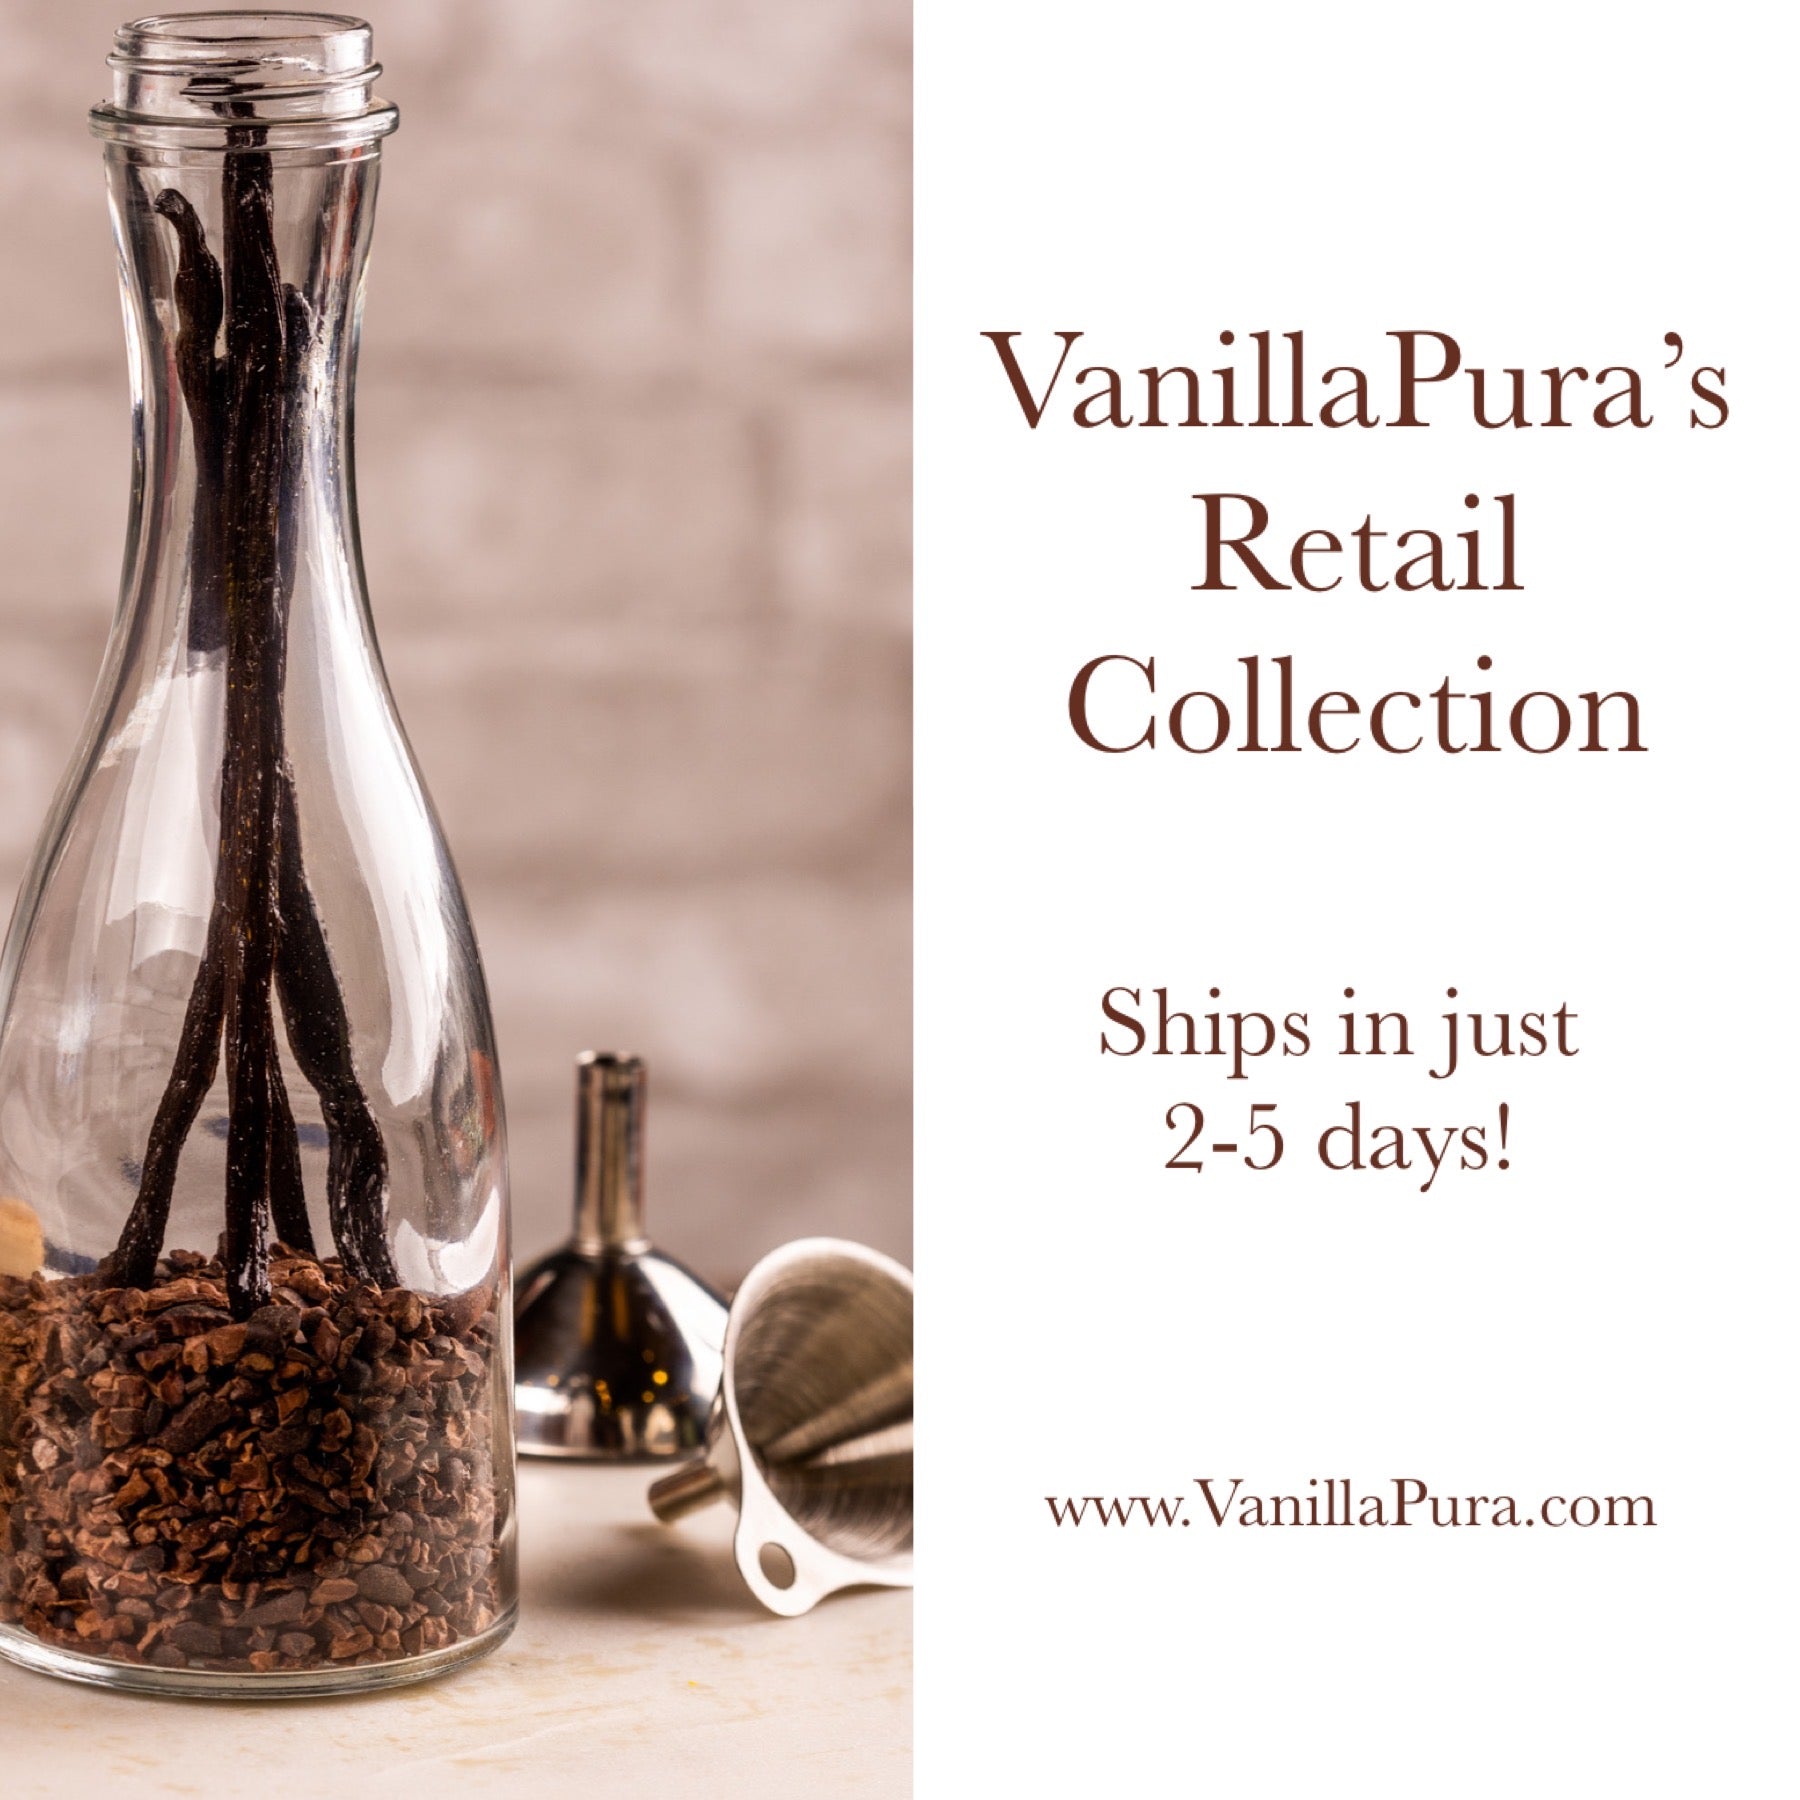 All VanillaPura Retail Products